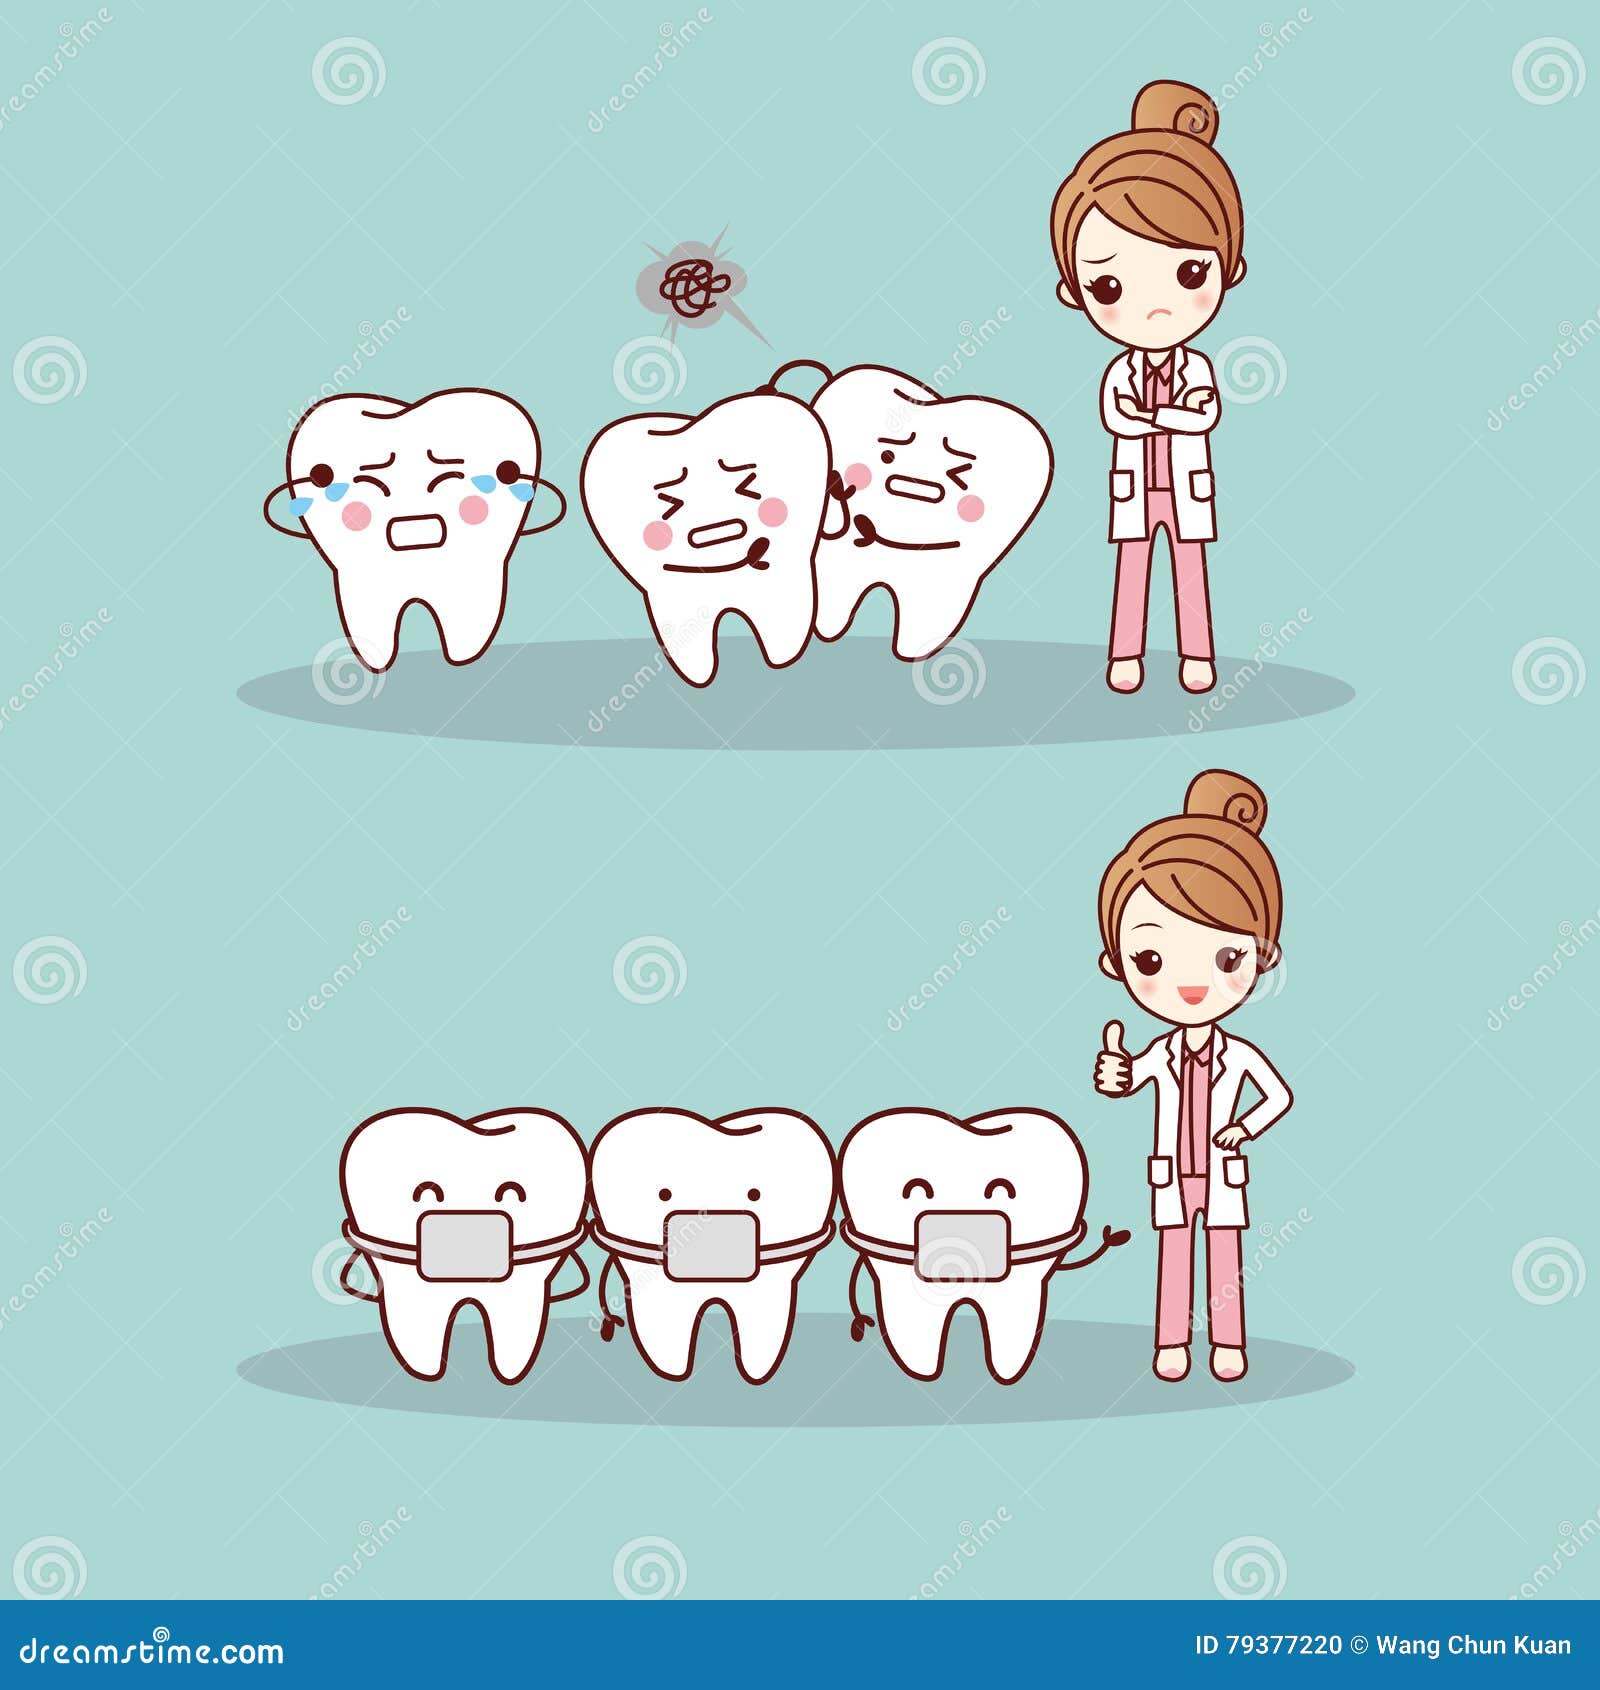 Cute cartoon tooth braces stock vector. Illustration of dentistry - 79377220